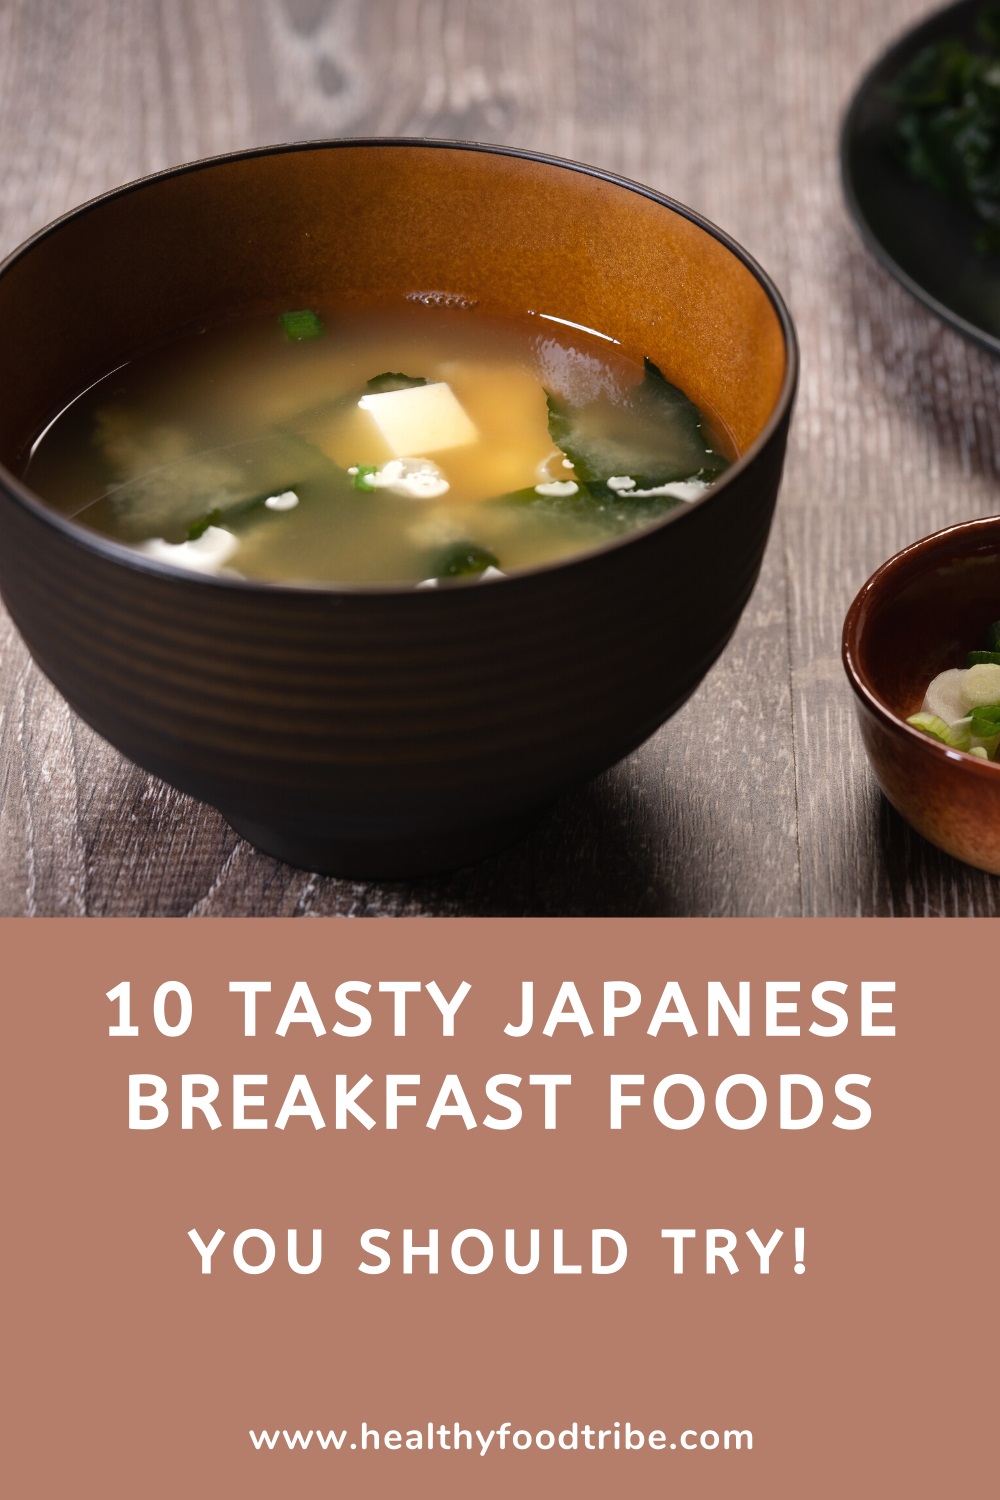 10 Common Japanese breakfast foods